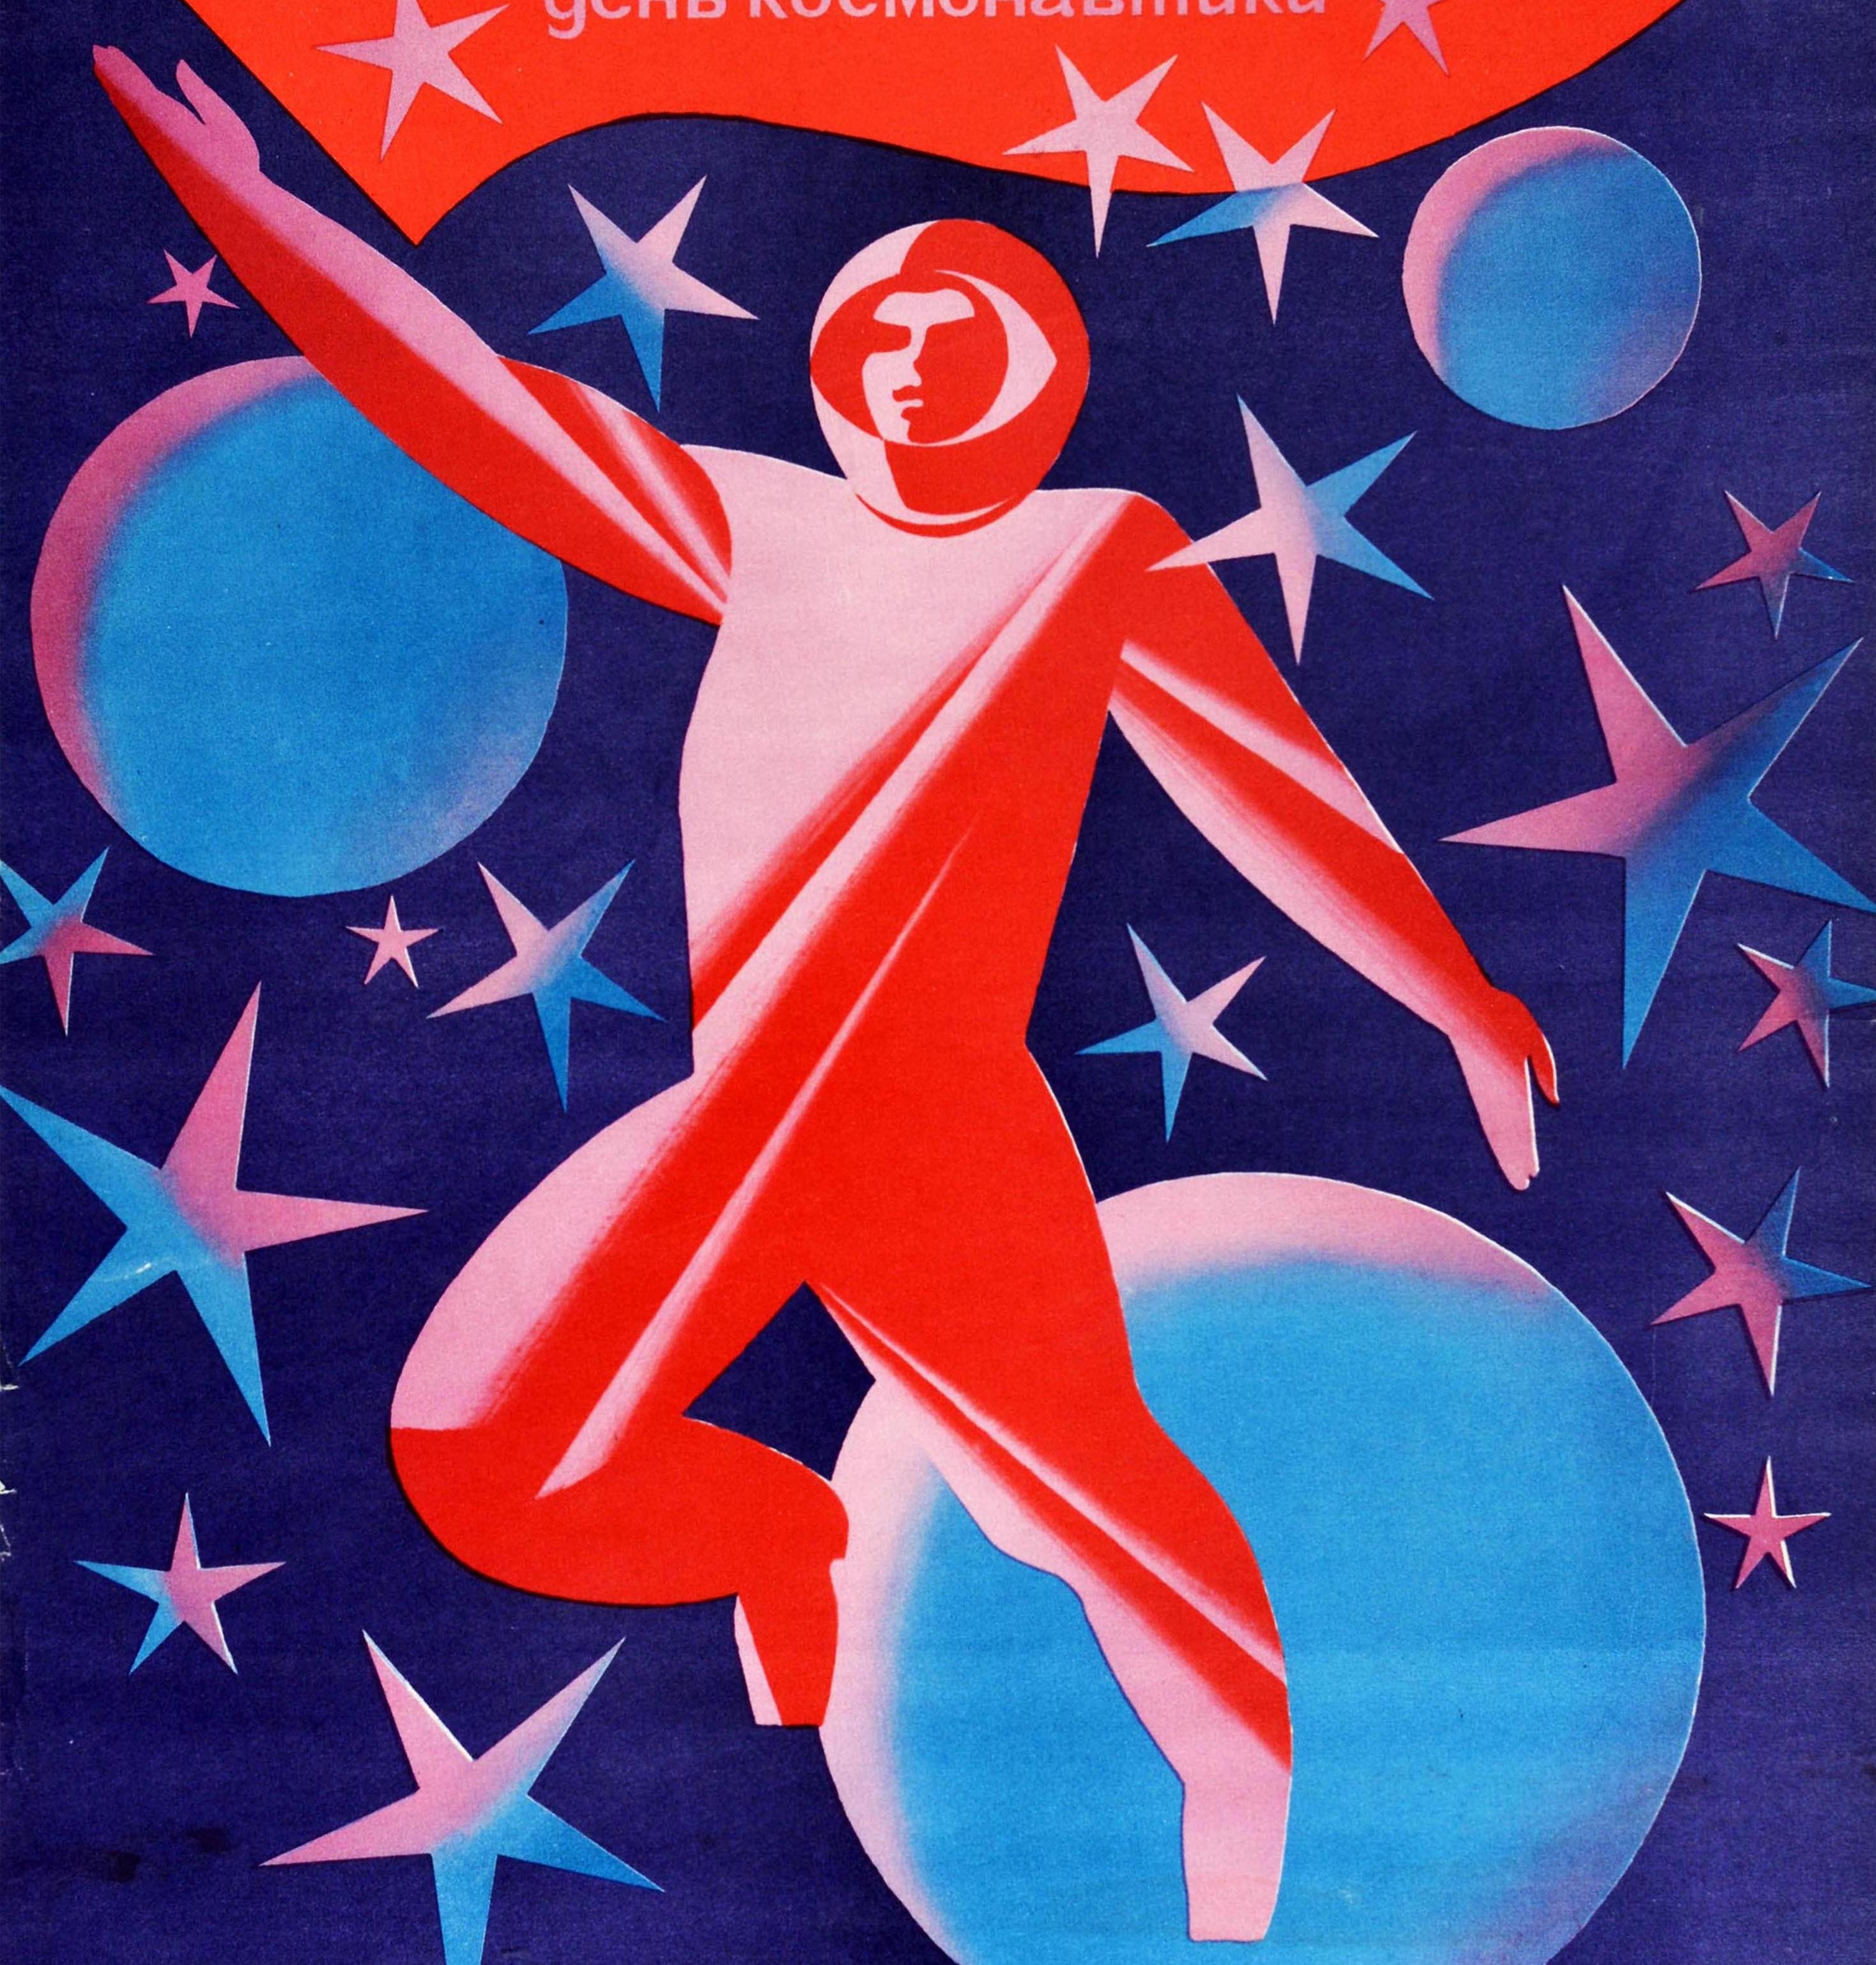 Late 20th Century Original Vintage Poster Cosmonautics Day 12 April USSR Space Exploration Gagarin